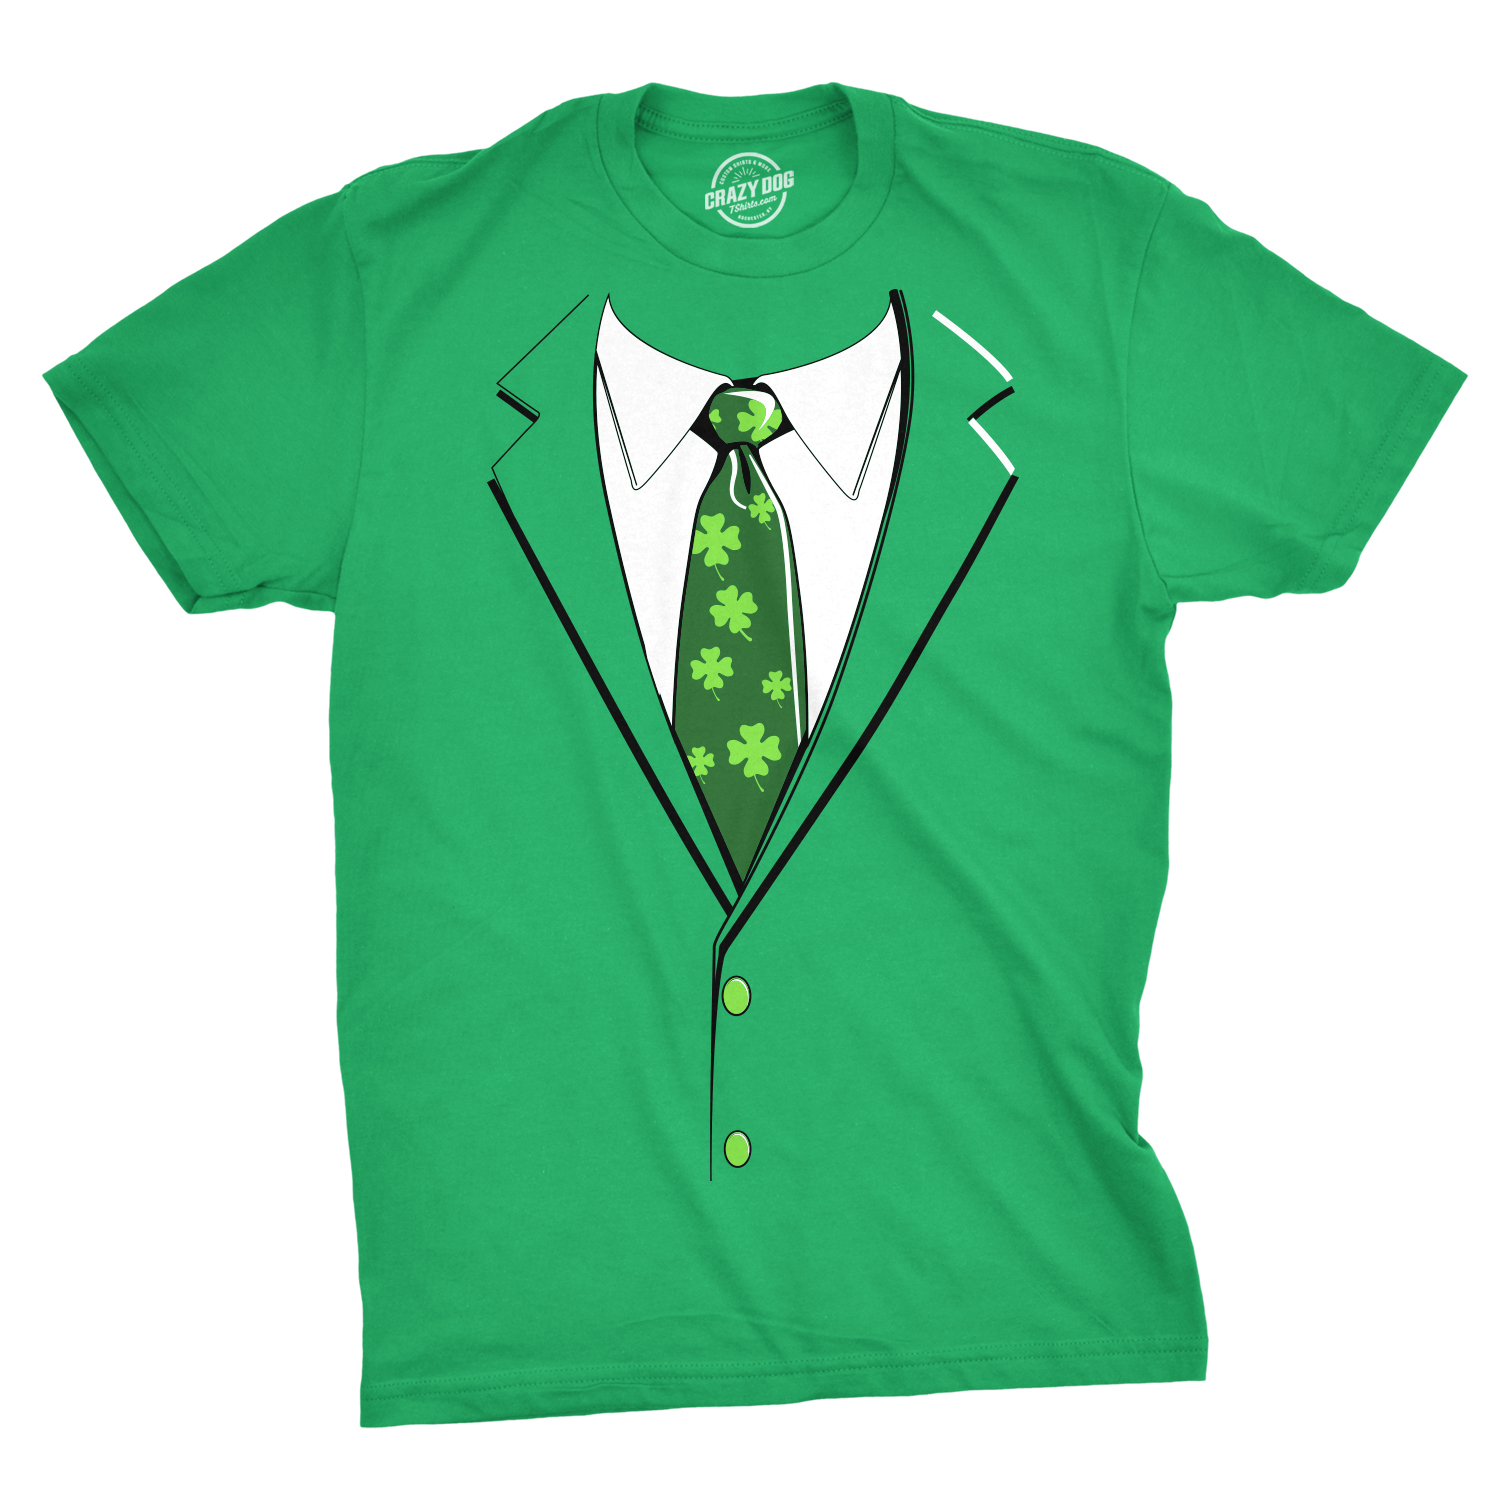 Crazy Dog Tshirts Green Irish Tuxedo T Shirt Funny Drinking Outfit for Saint Patricks Day Patty